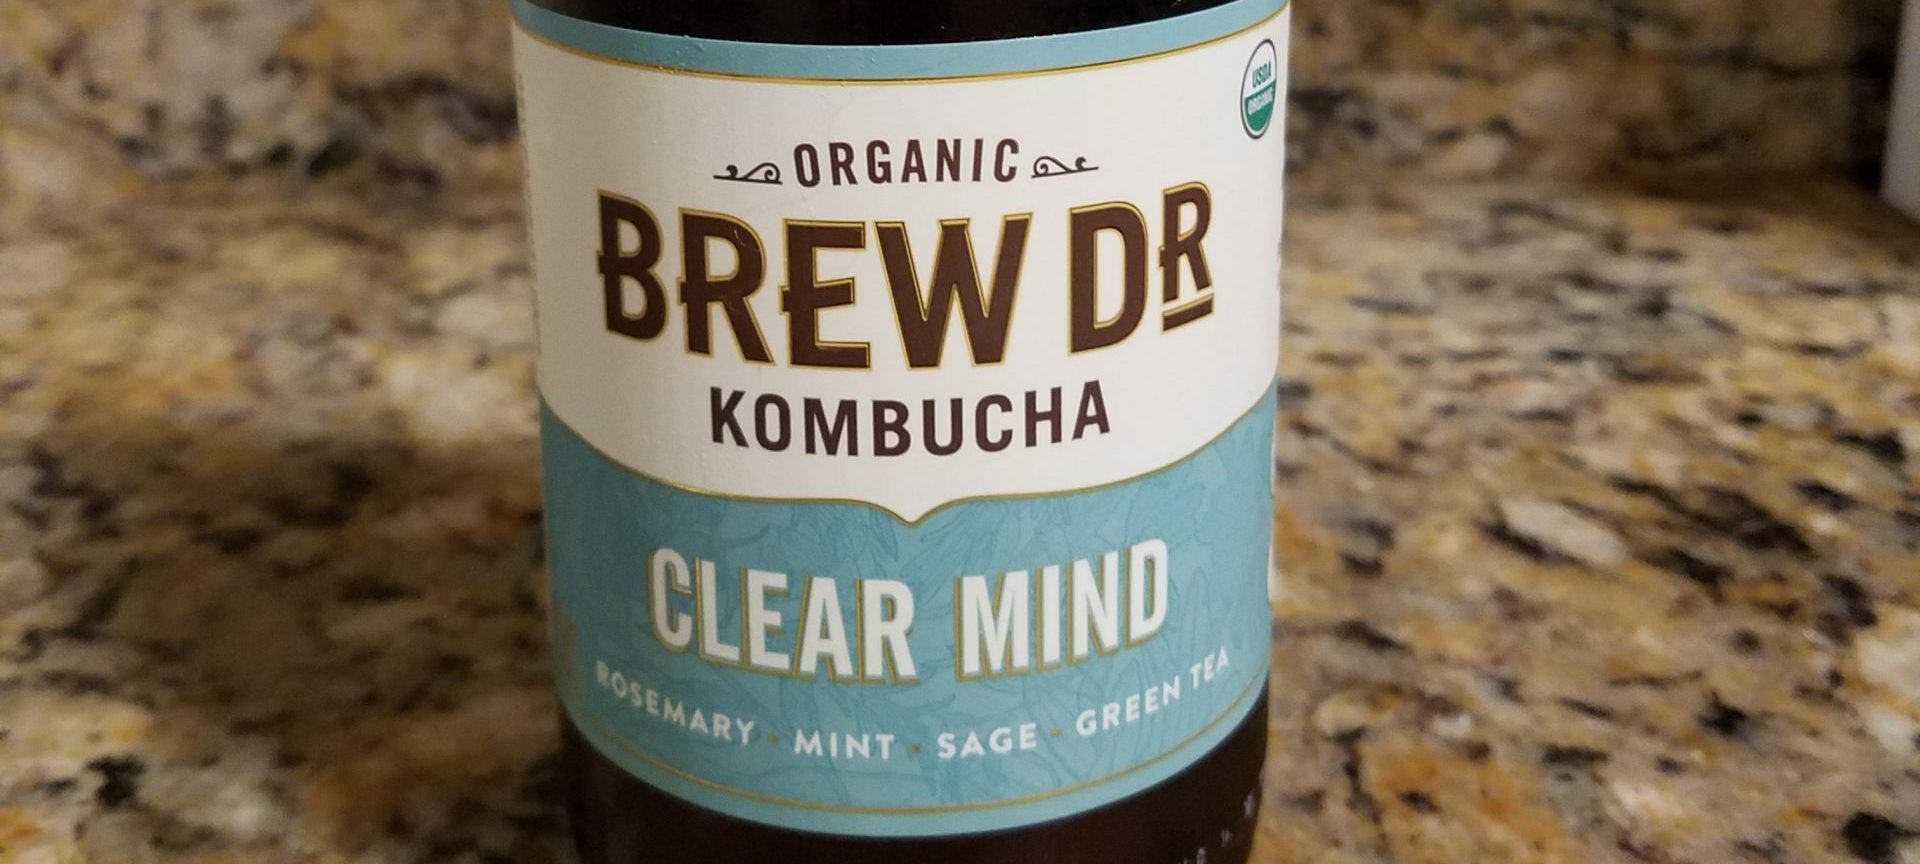 Trader Joe's Brew Dr. Kombucha Clear Mind Review